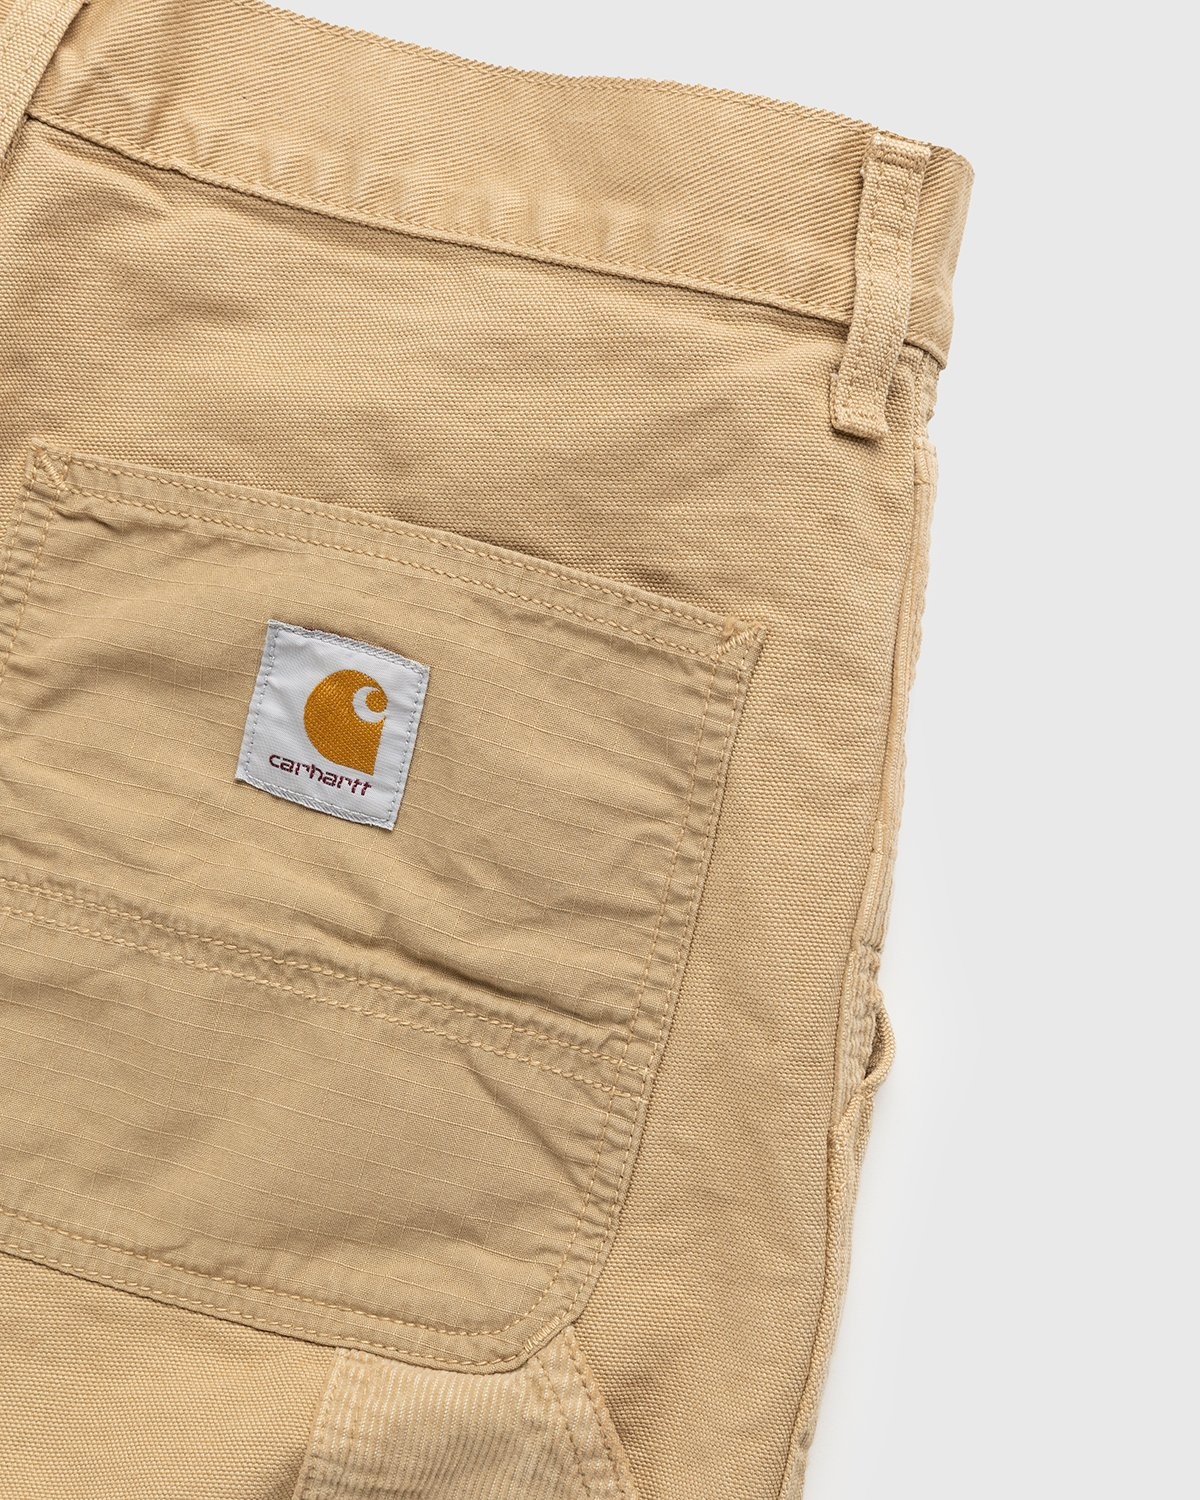 Carhartt WIP – Medley Pant Dusty Hamilton Brown Garment Dyed - Work Pants - Brown - Image 3